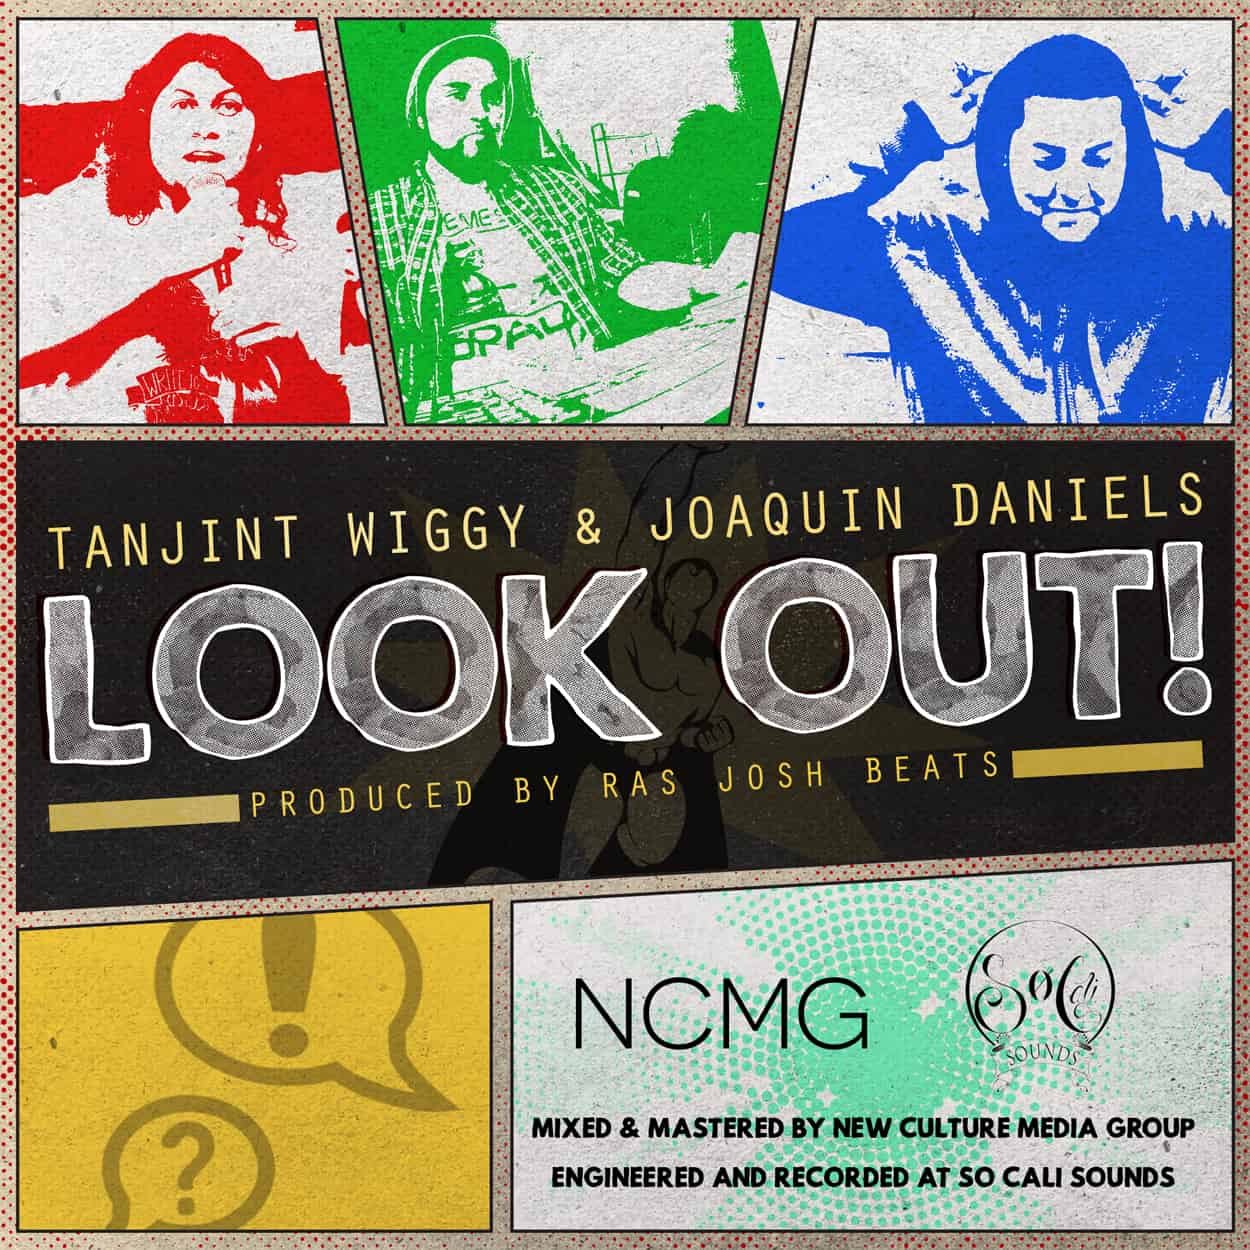 Tanjint Wiggy and Joaquin Daniels - Look Out - Album Art Design